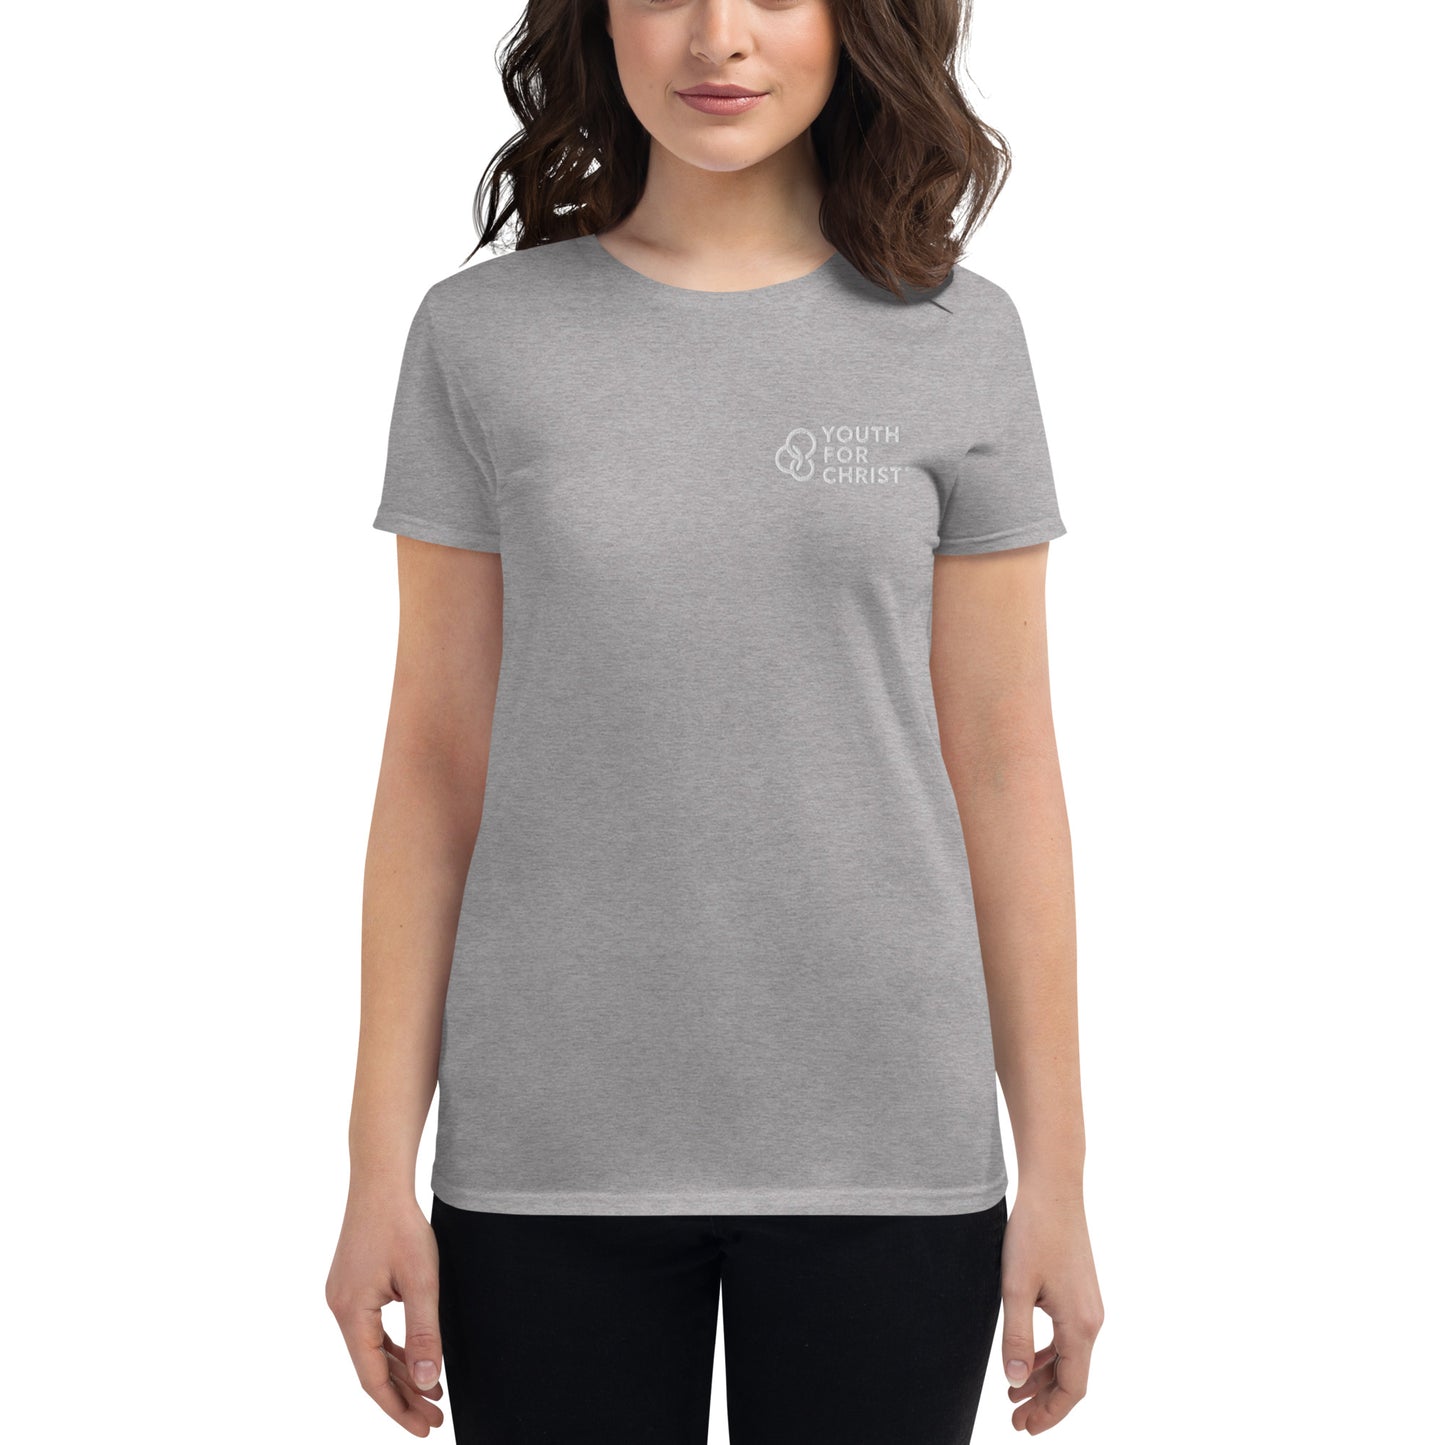 YFC Women's Fitted T-Shirt